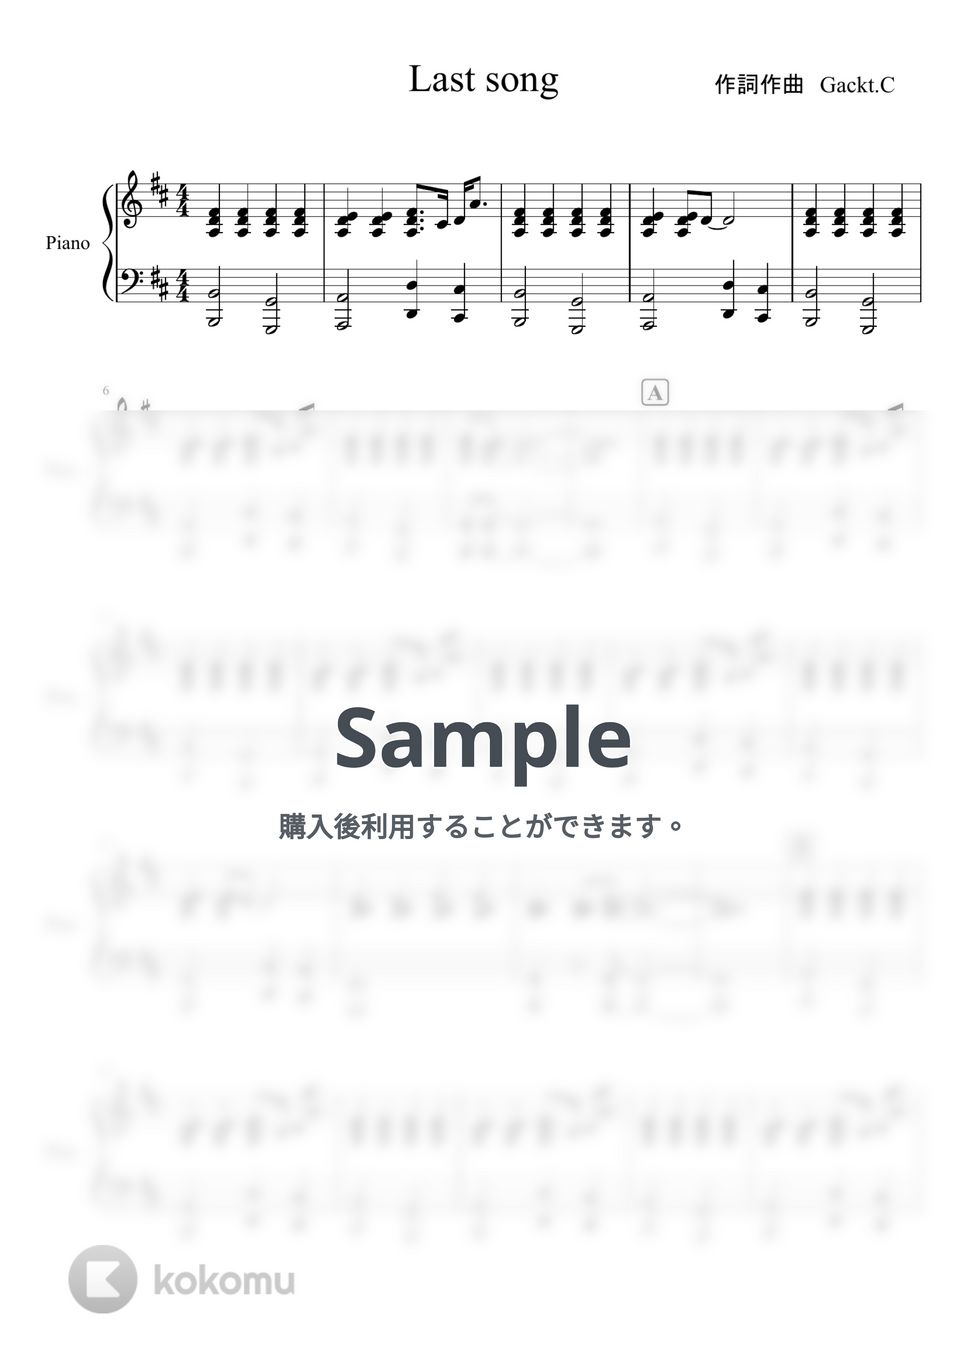 Gackt - Last Song (ピアノ伴奏) by yunipiano